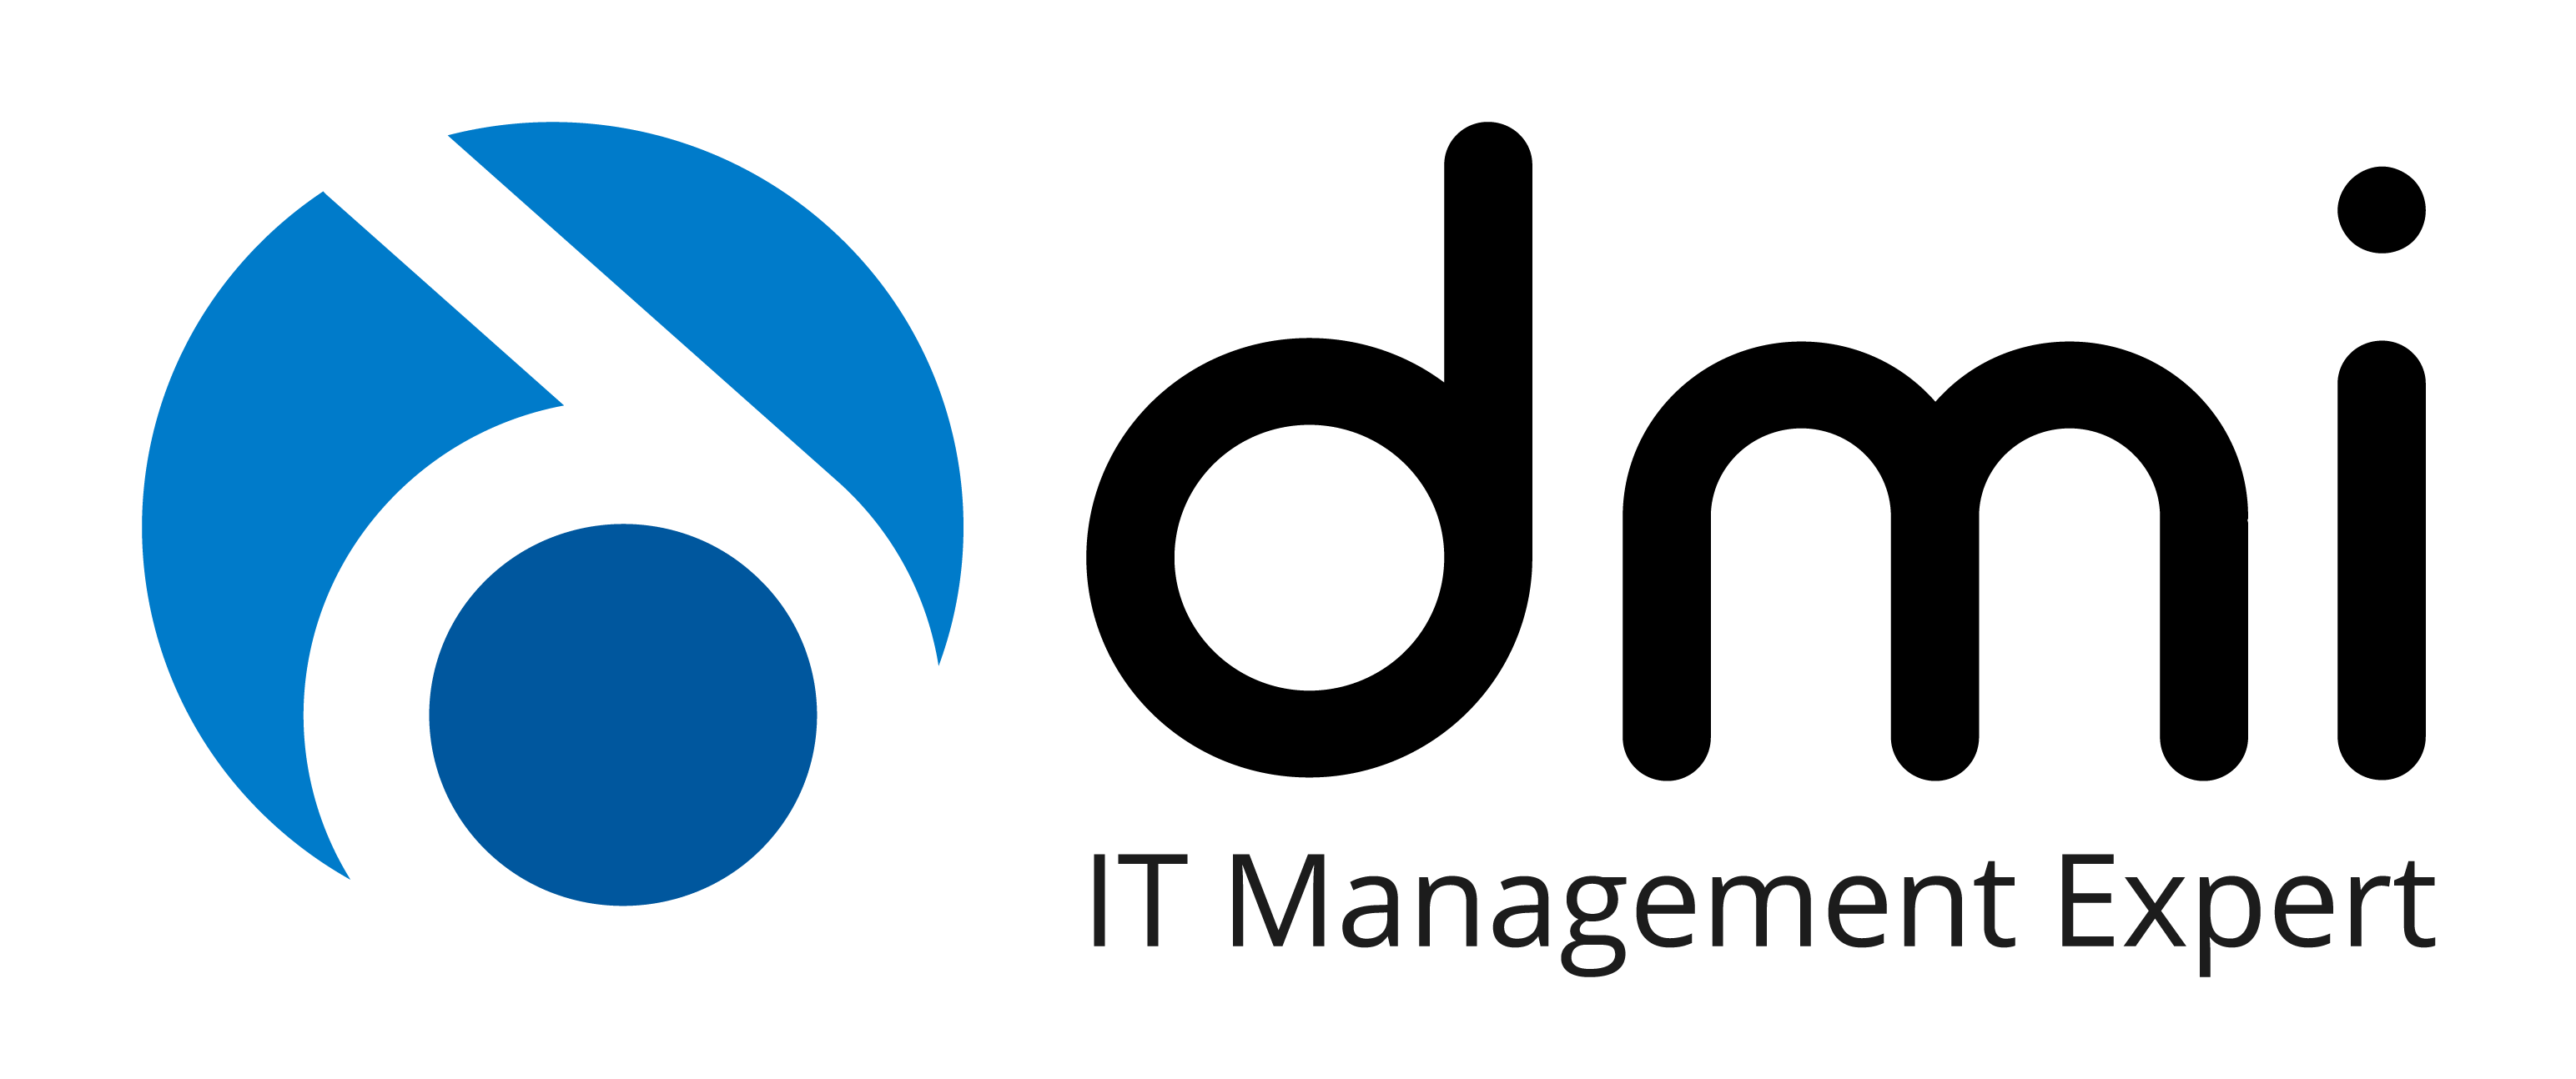 DMI – IT Management Expert